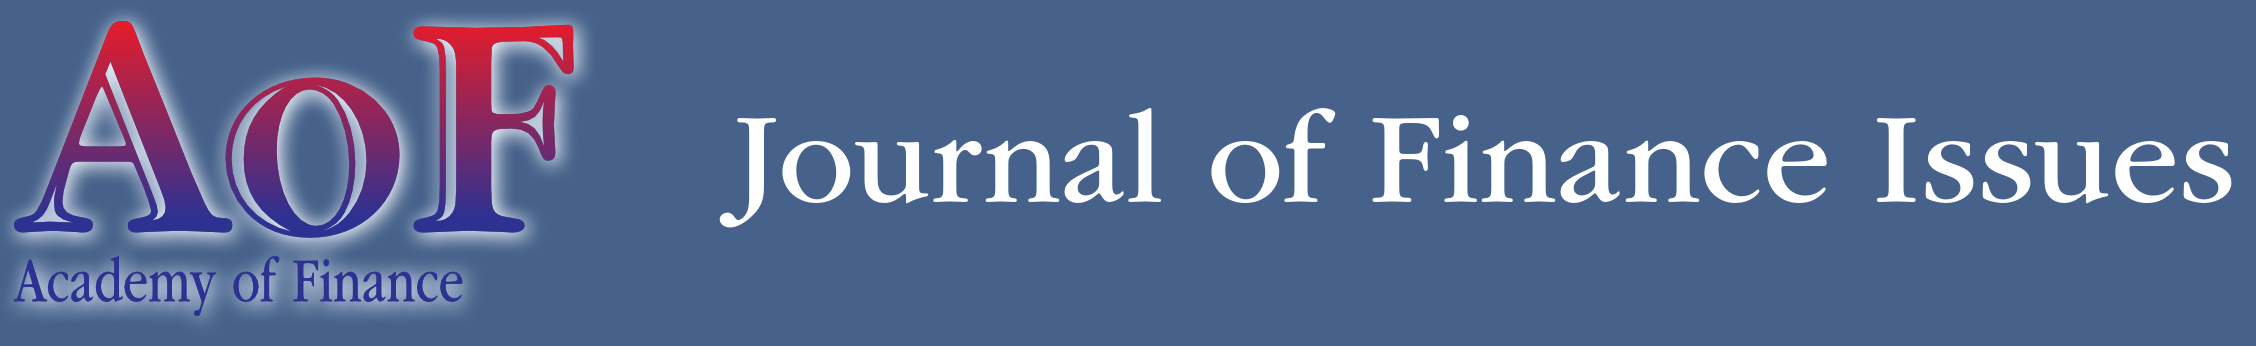 Journal of Finance Issues logo